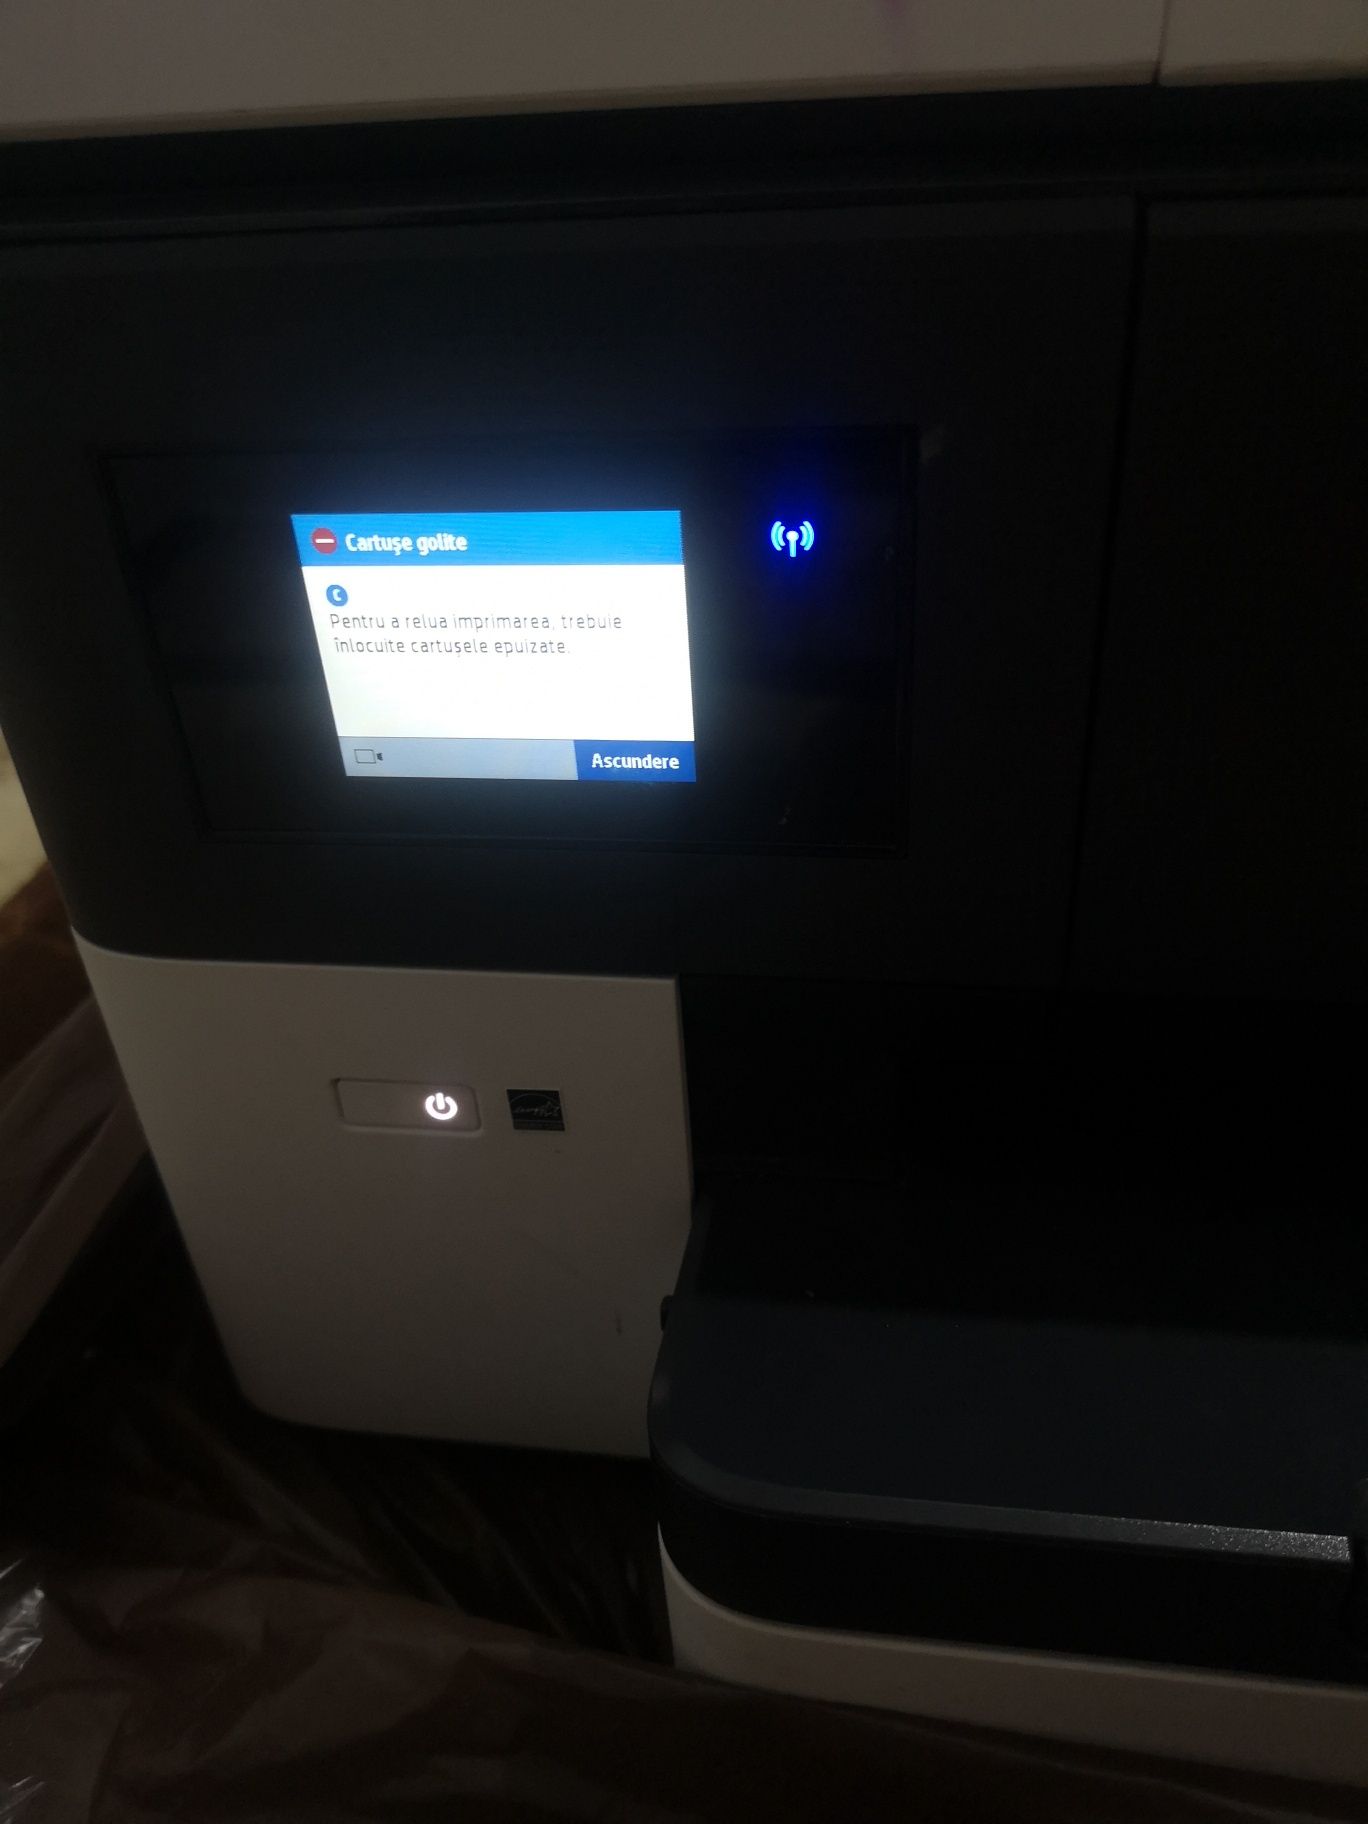 Imprimanta HP 7720 scaner multifuncțional